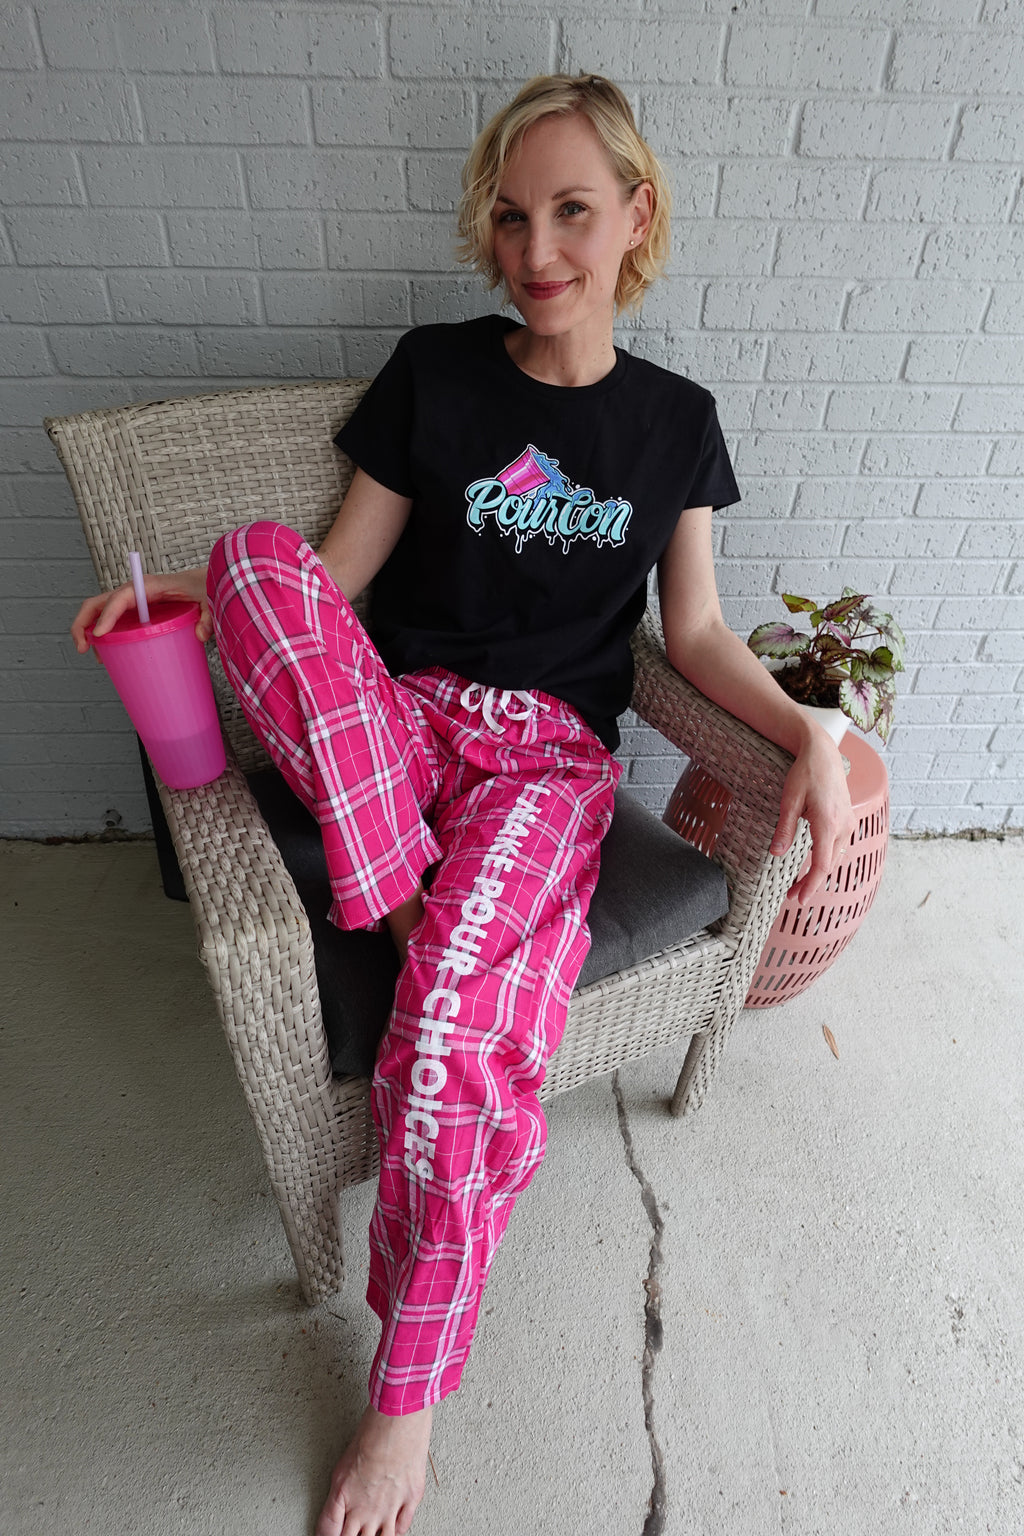 Pink Pajama Pants for Women